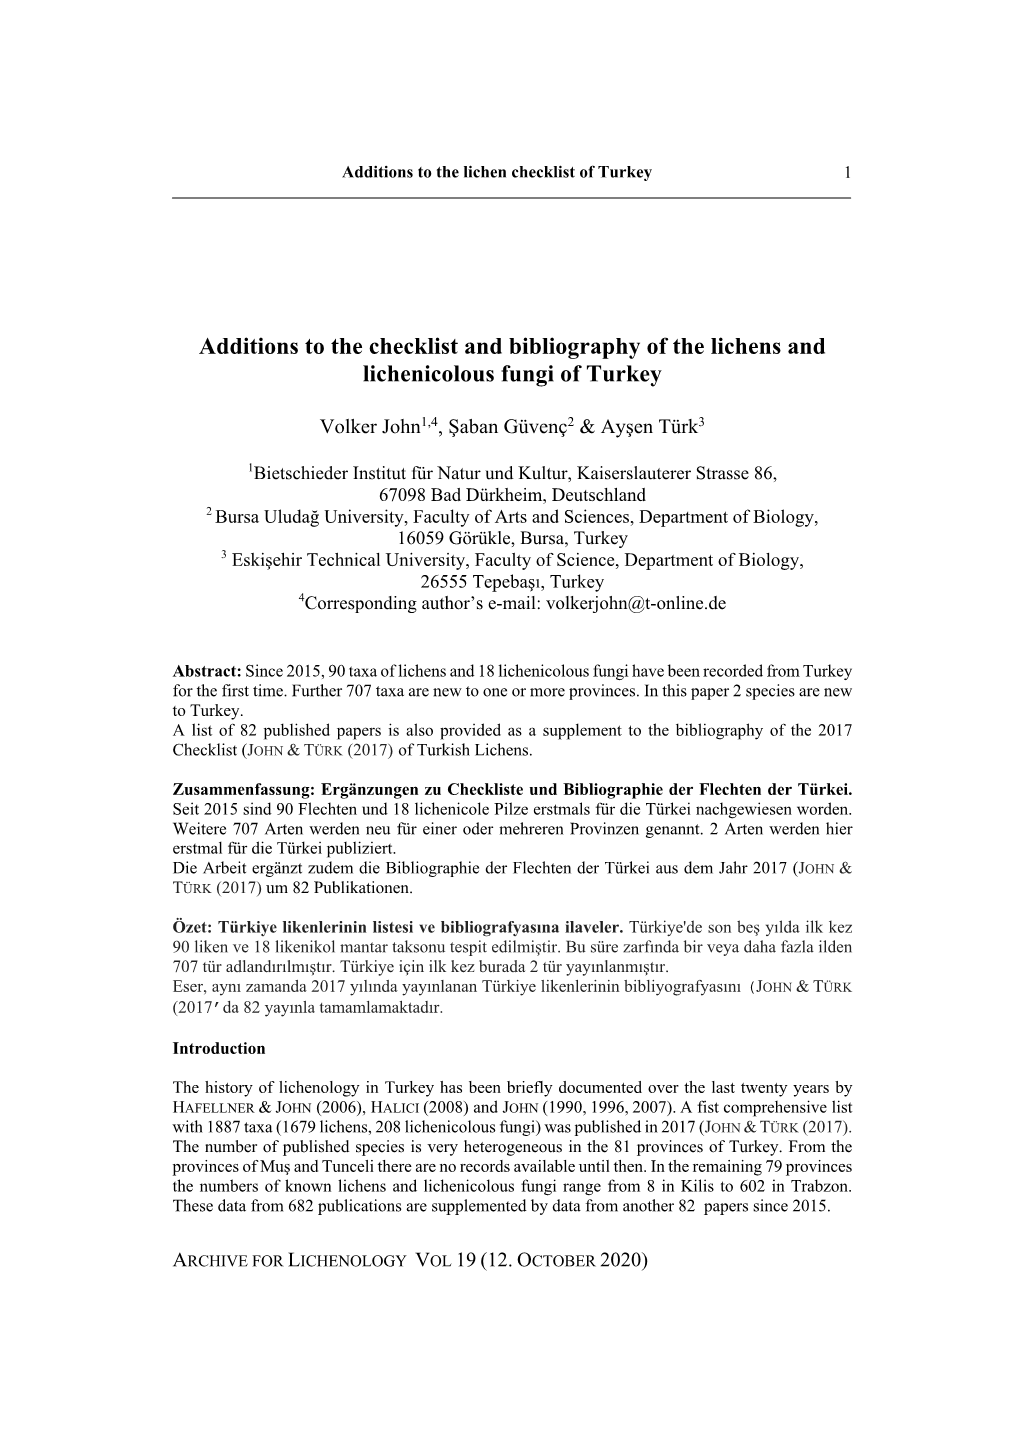 Additions to the Checklist and Bibliography of the Lichens and Lichenicolous Fungi of Turkey